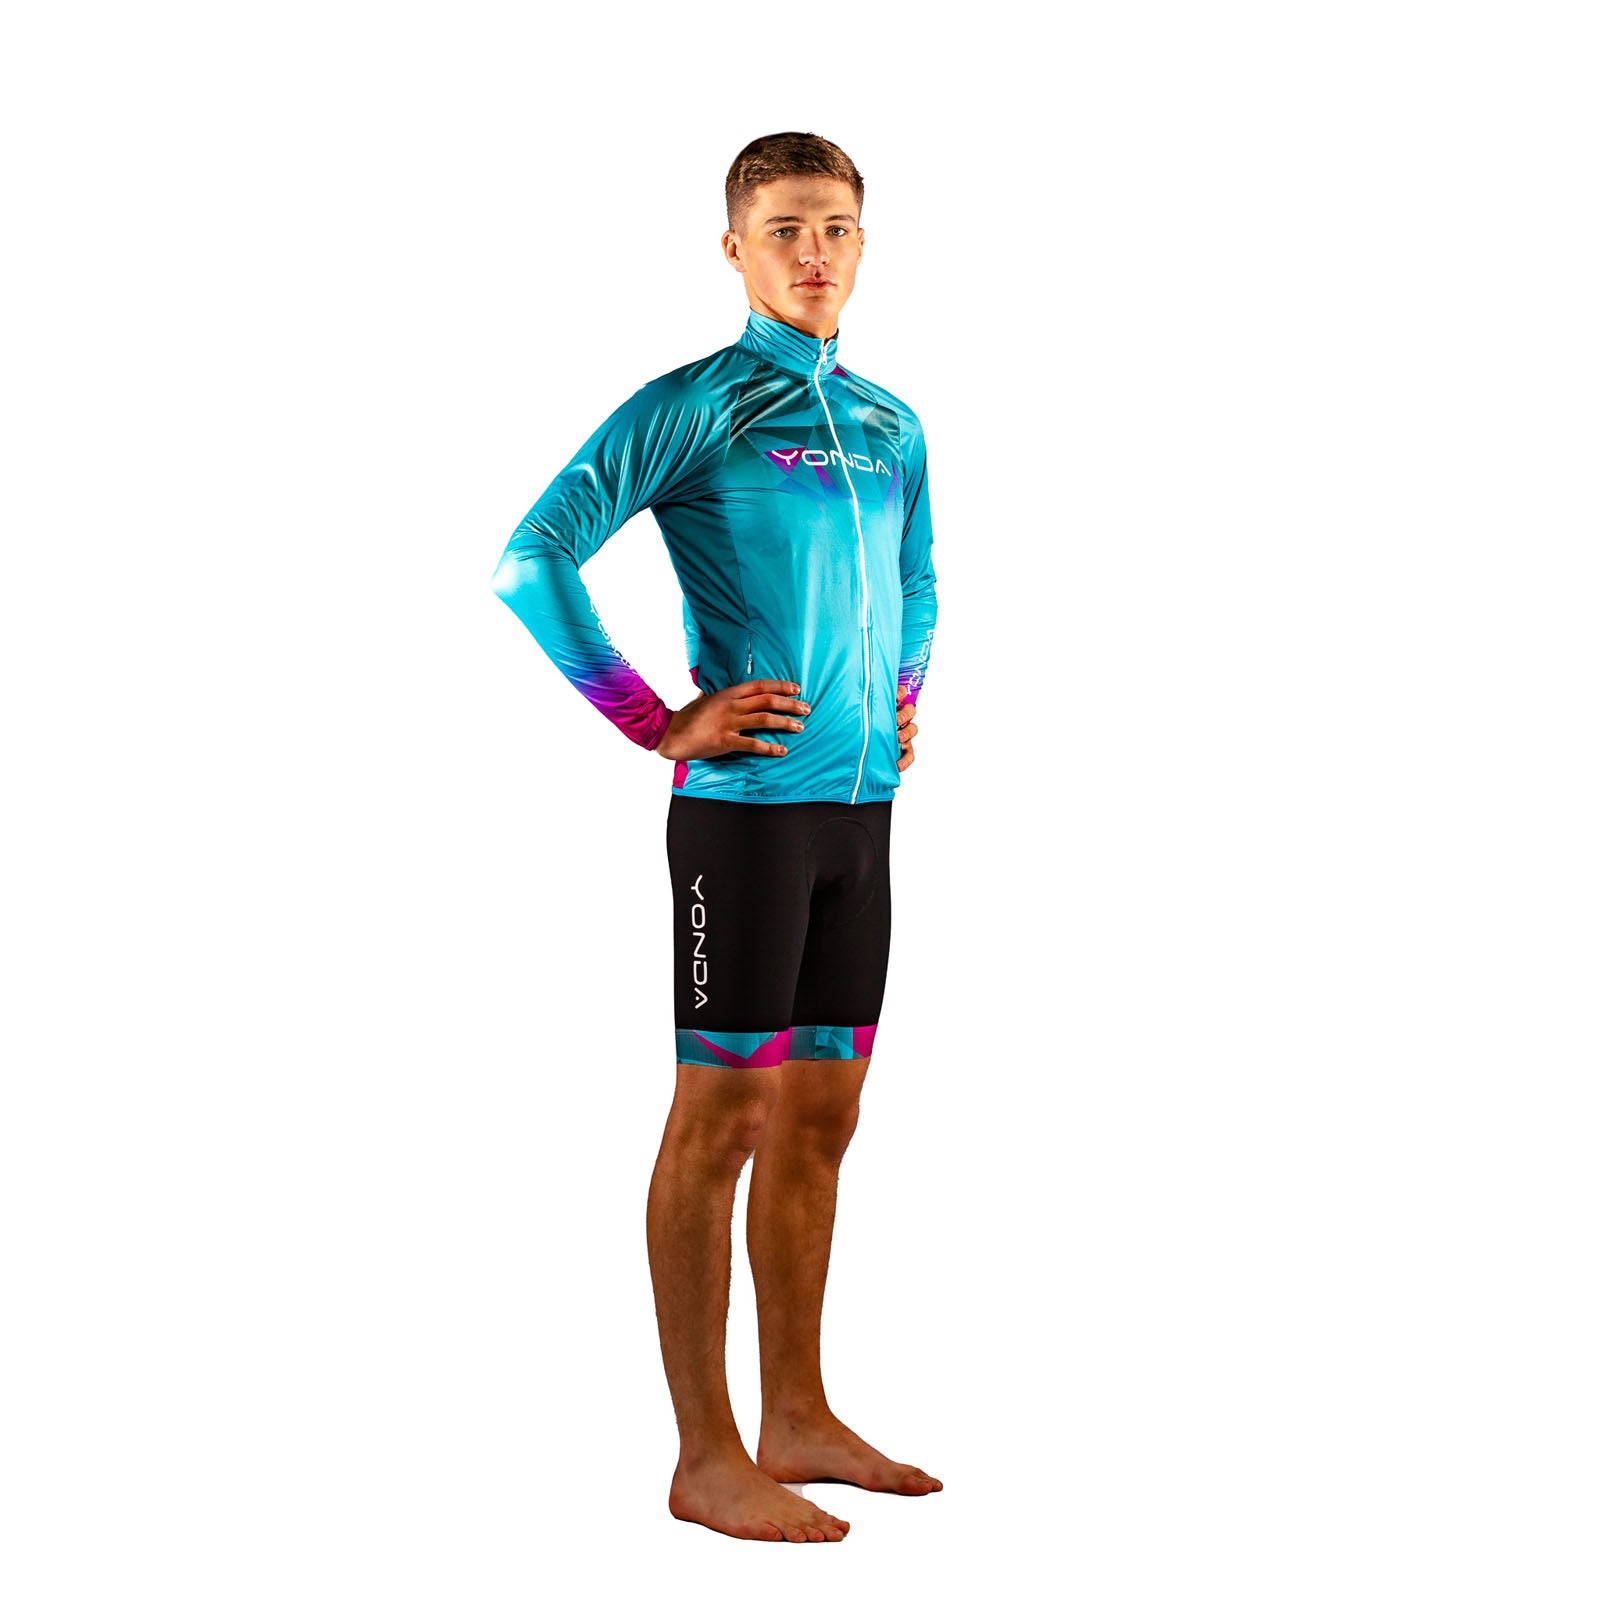 Astratto blu multisport jacket & Astratto blu bib shorts male3